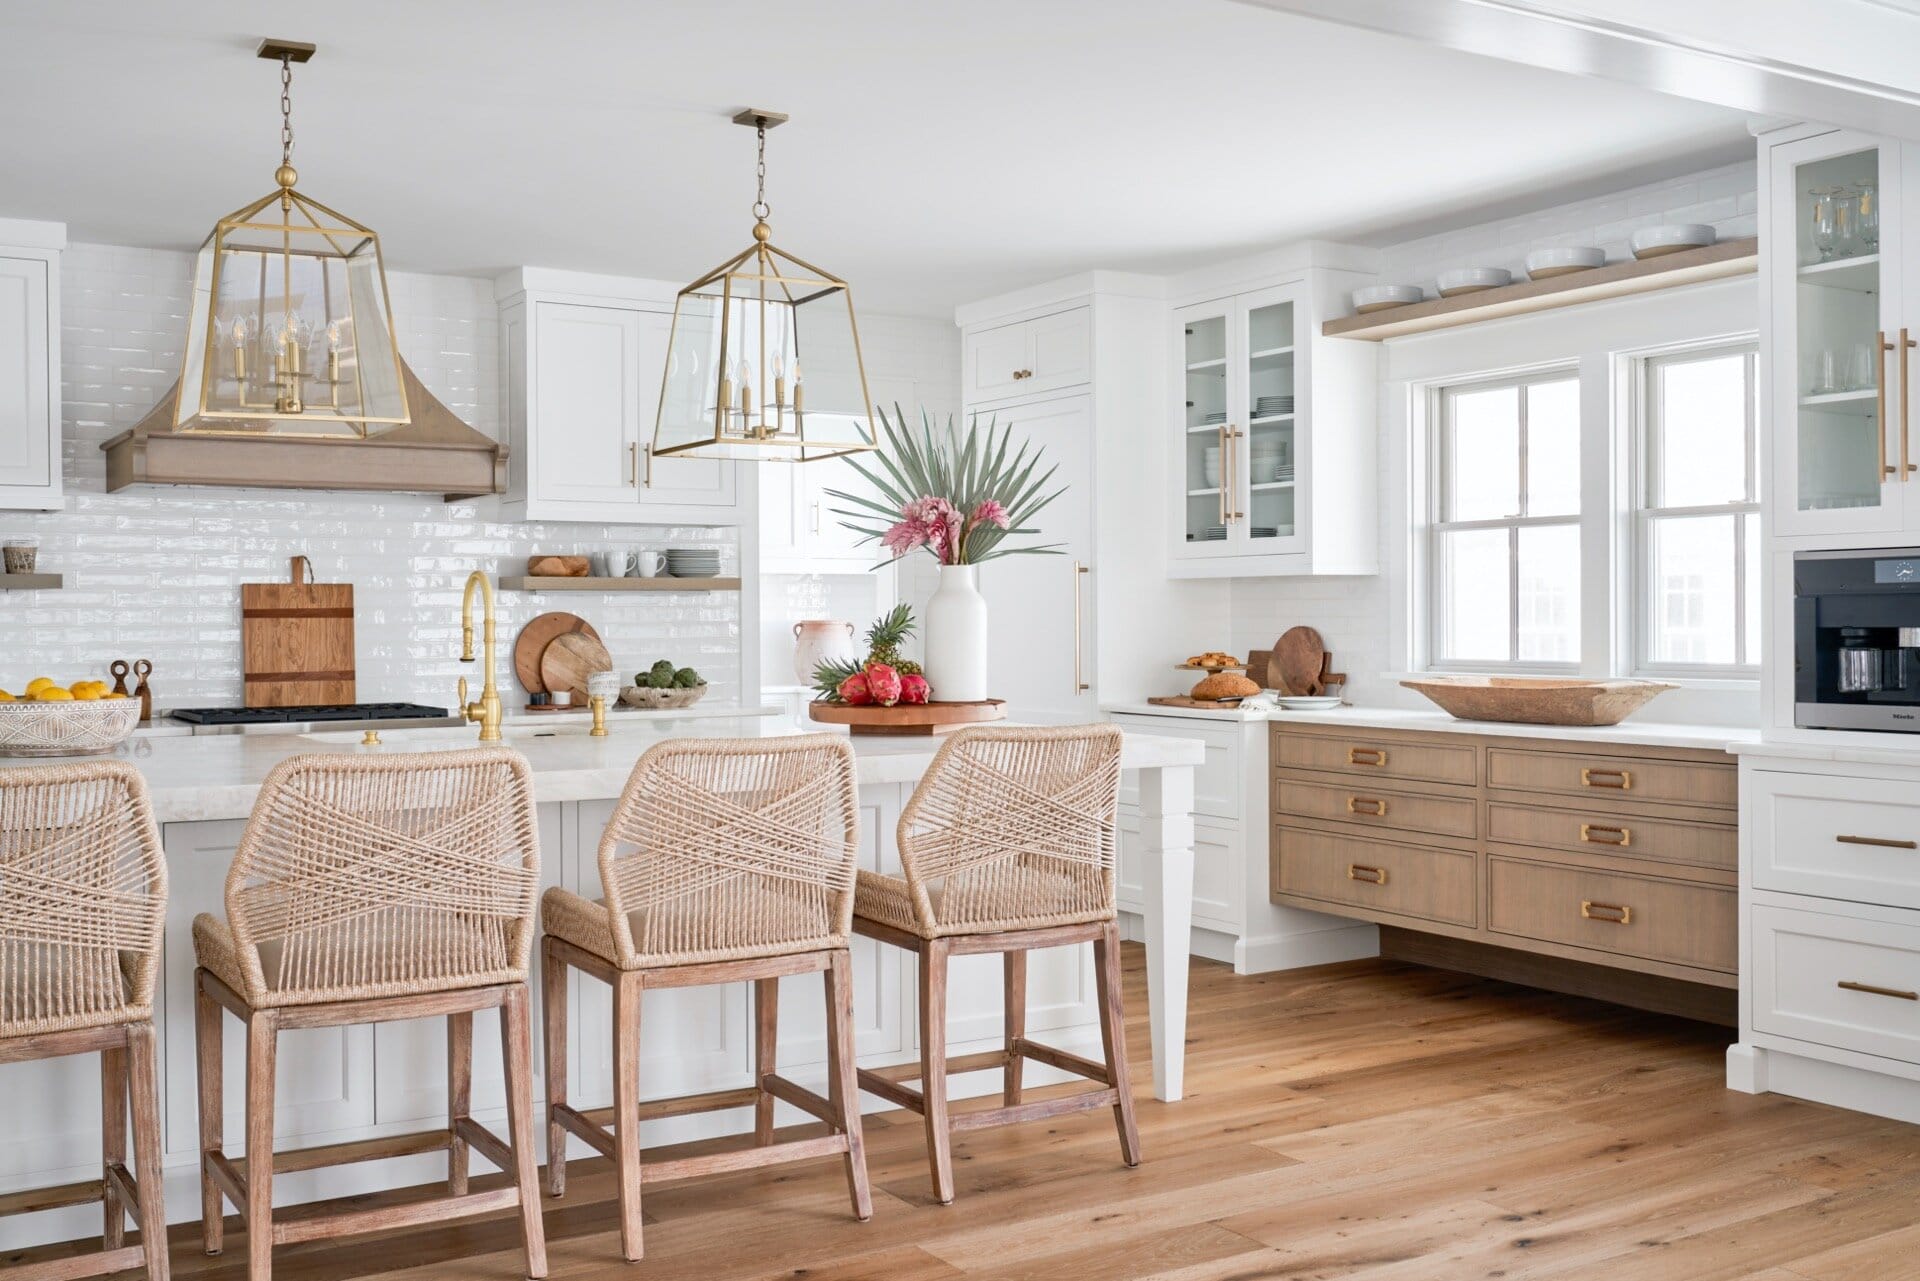 Ocean City beach house kitchen designed by Stephanie Kraus | Nathan Schroder Photography 